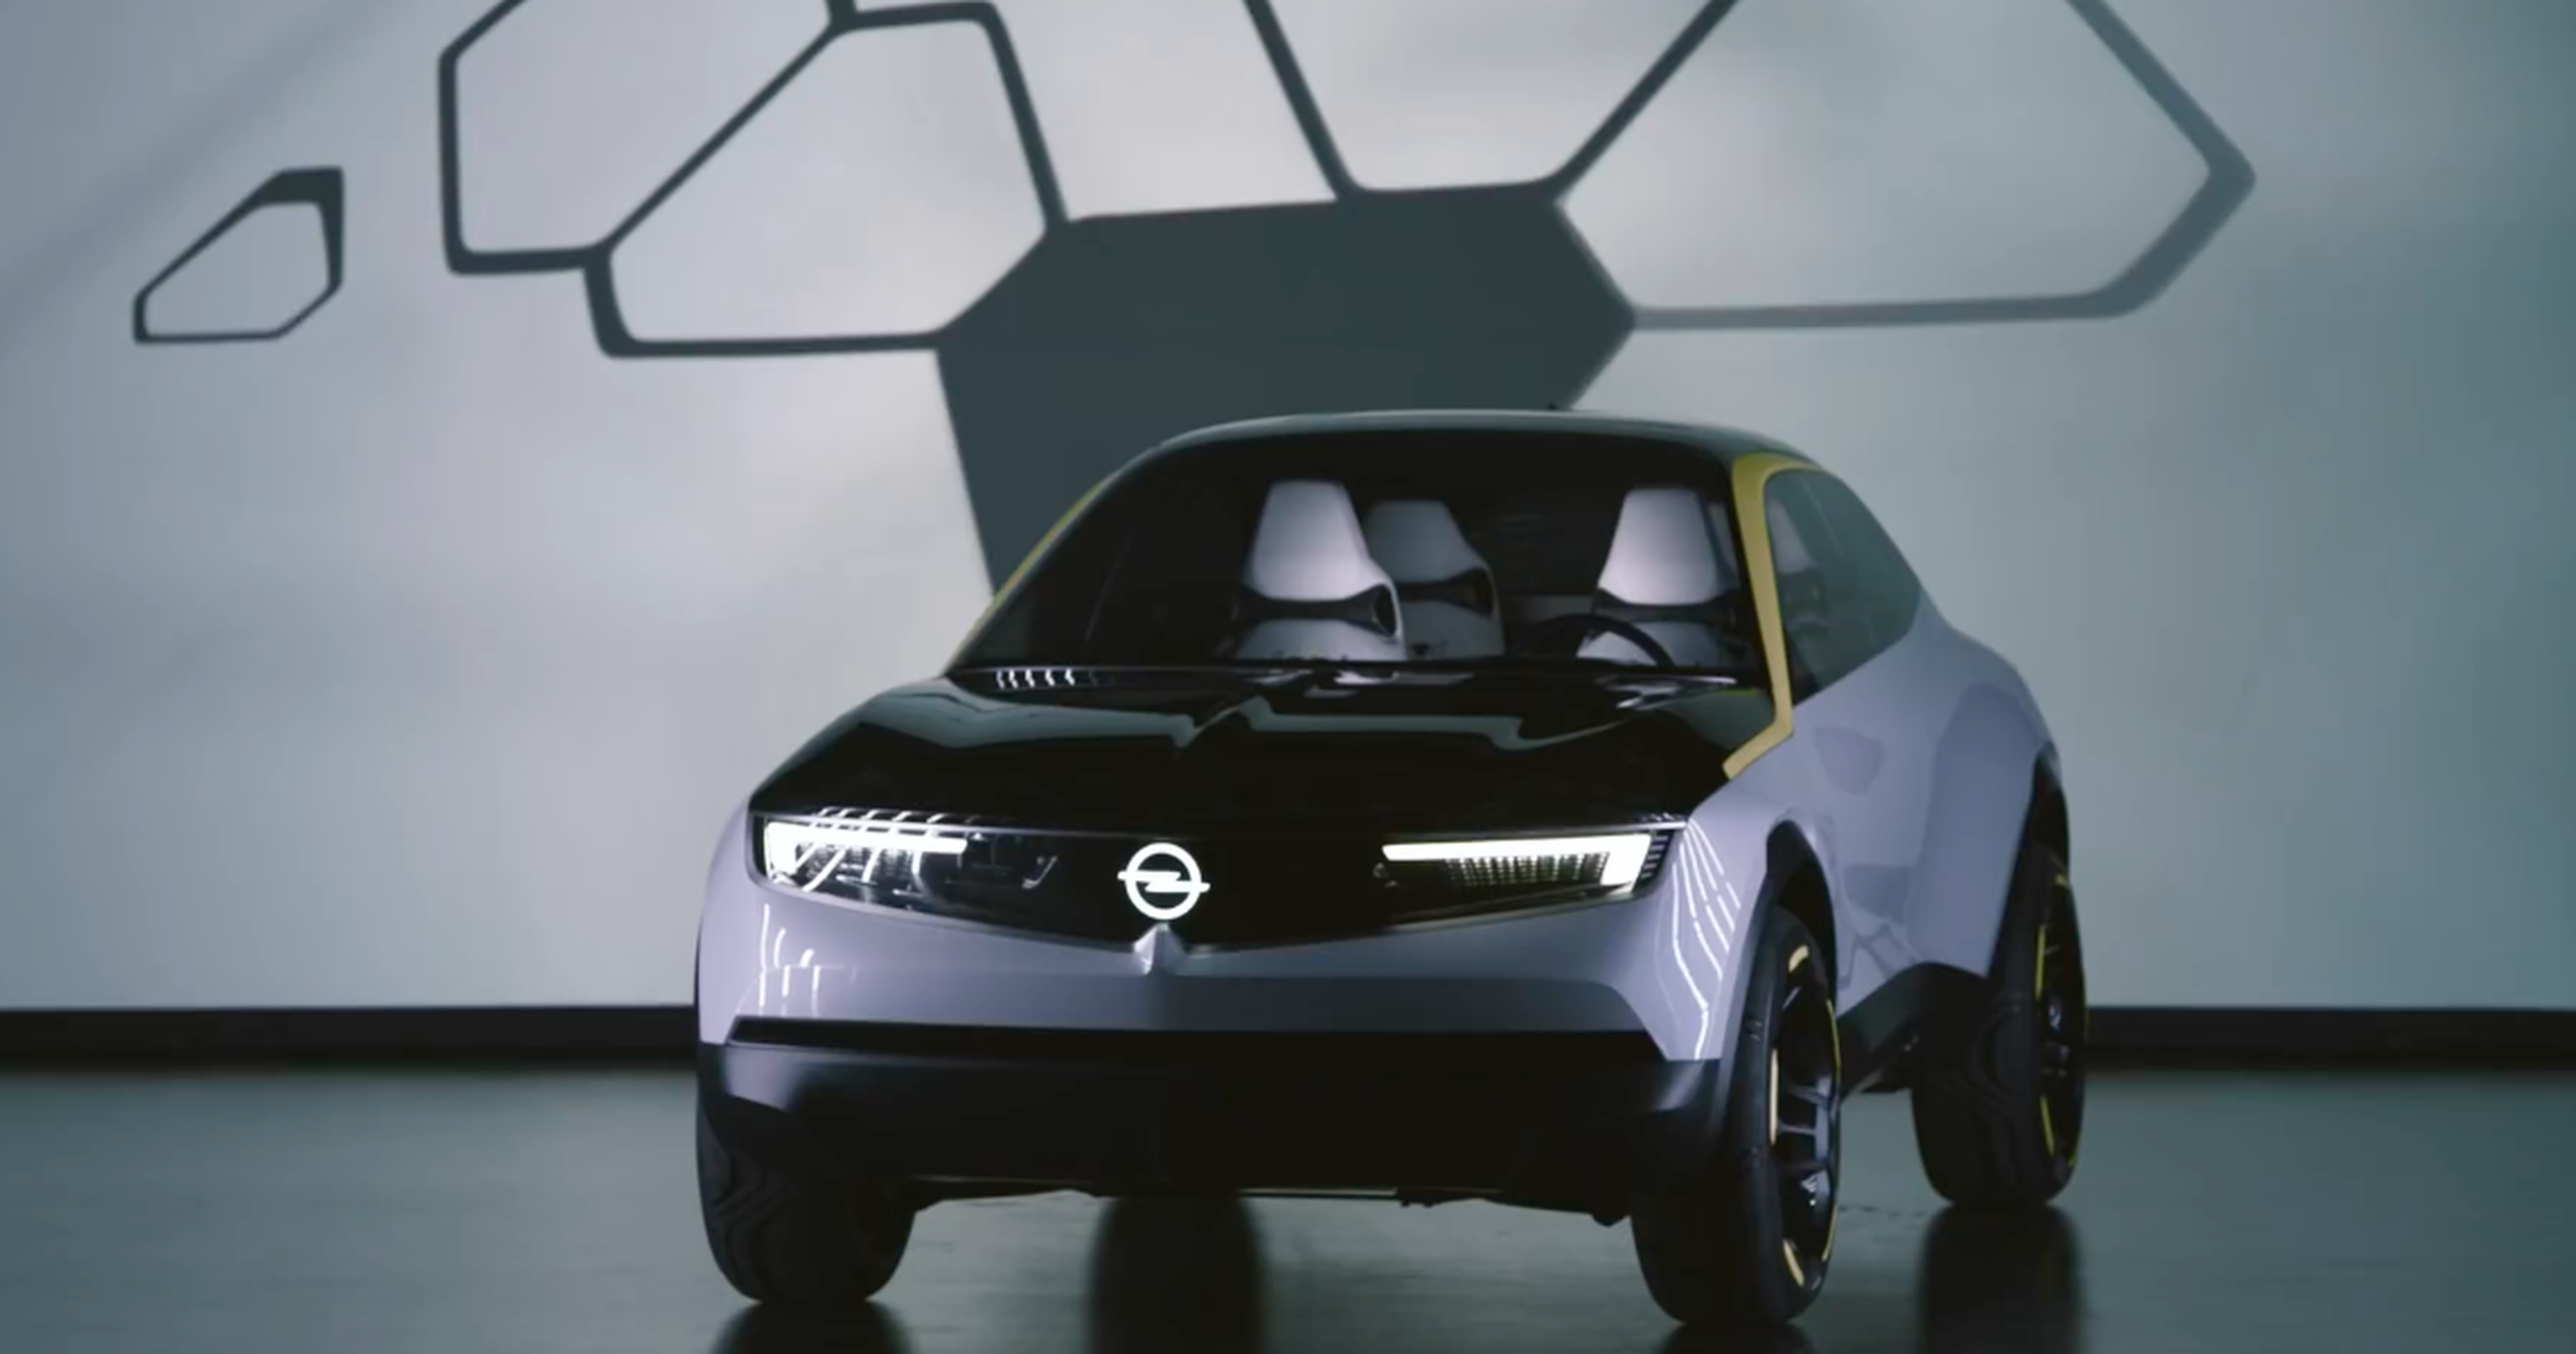 VÍDEO: Opel GT X Experimental, así es el Opel del futuro